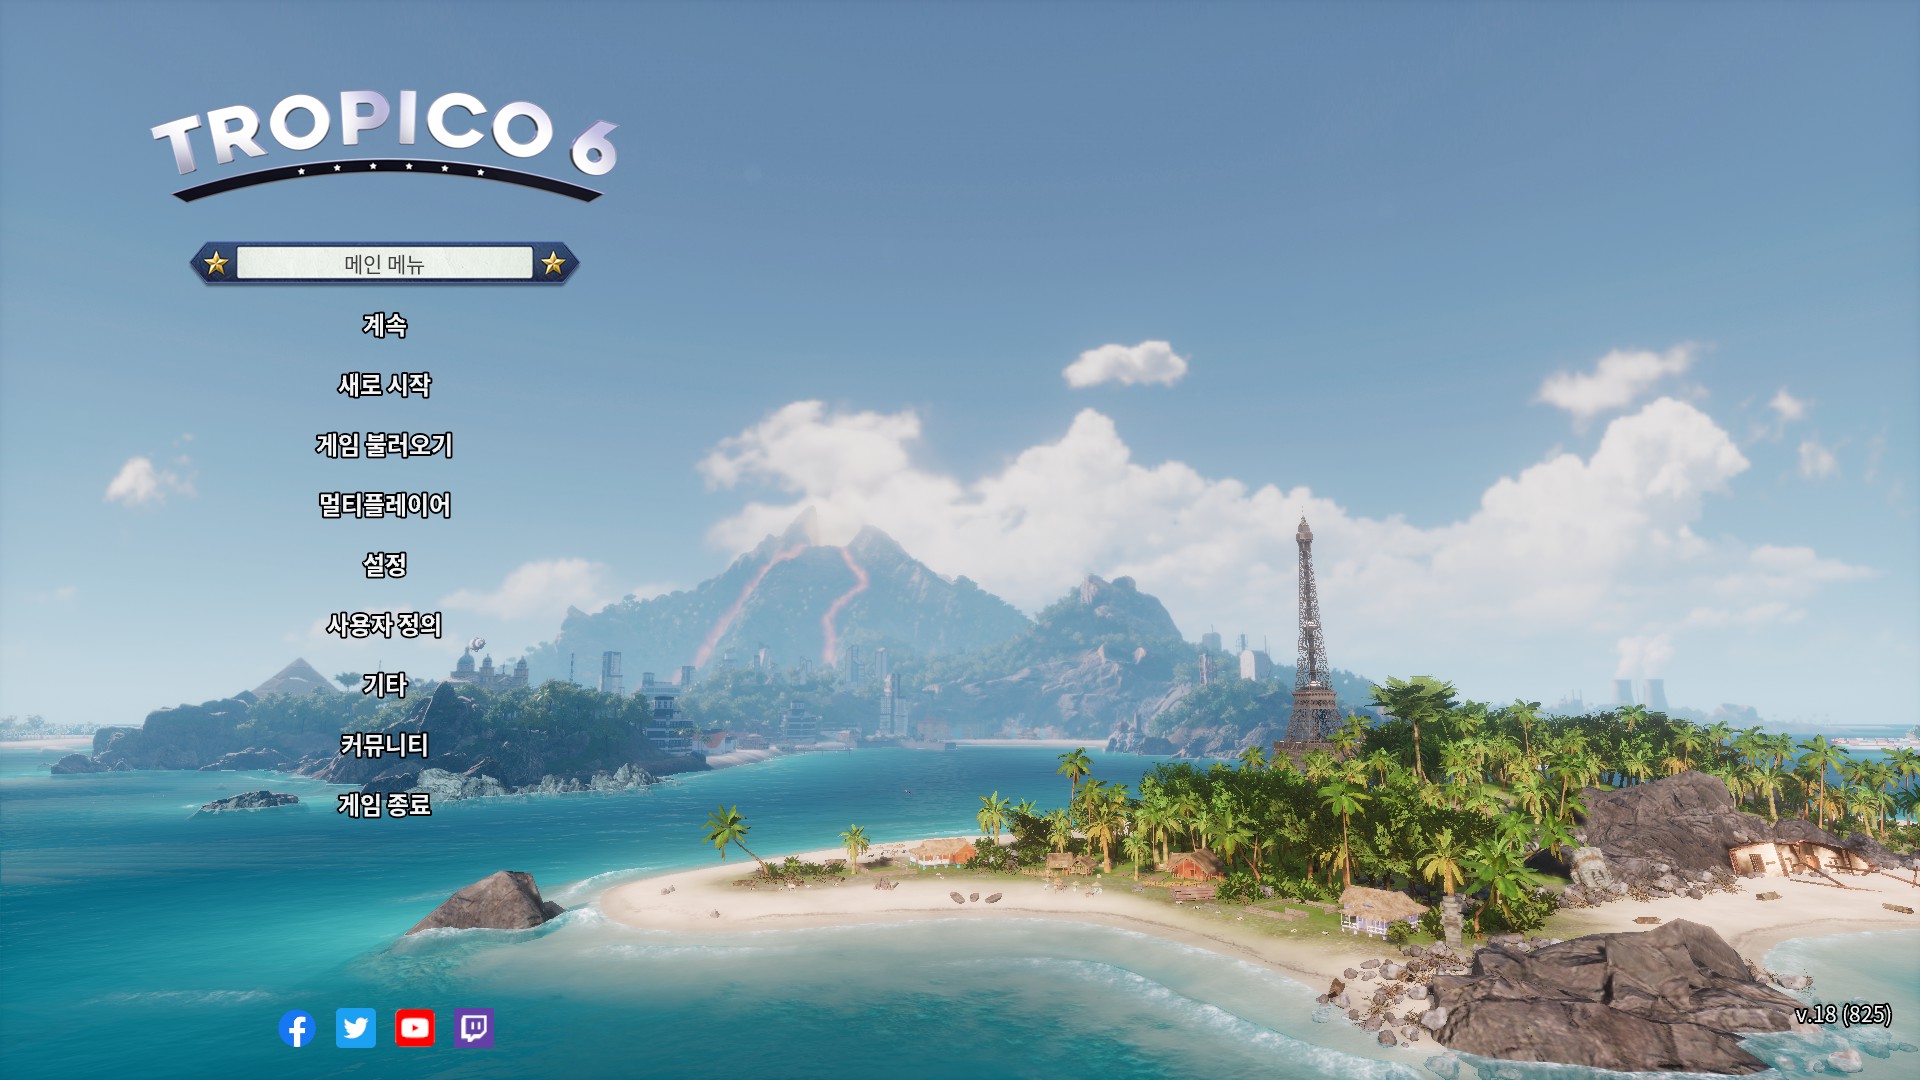 Tropico 6 (트로피코 6)&#44; 메인화면